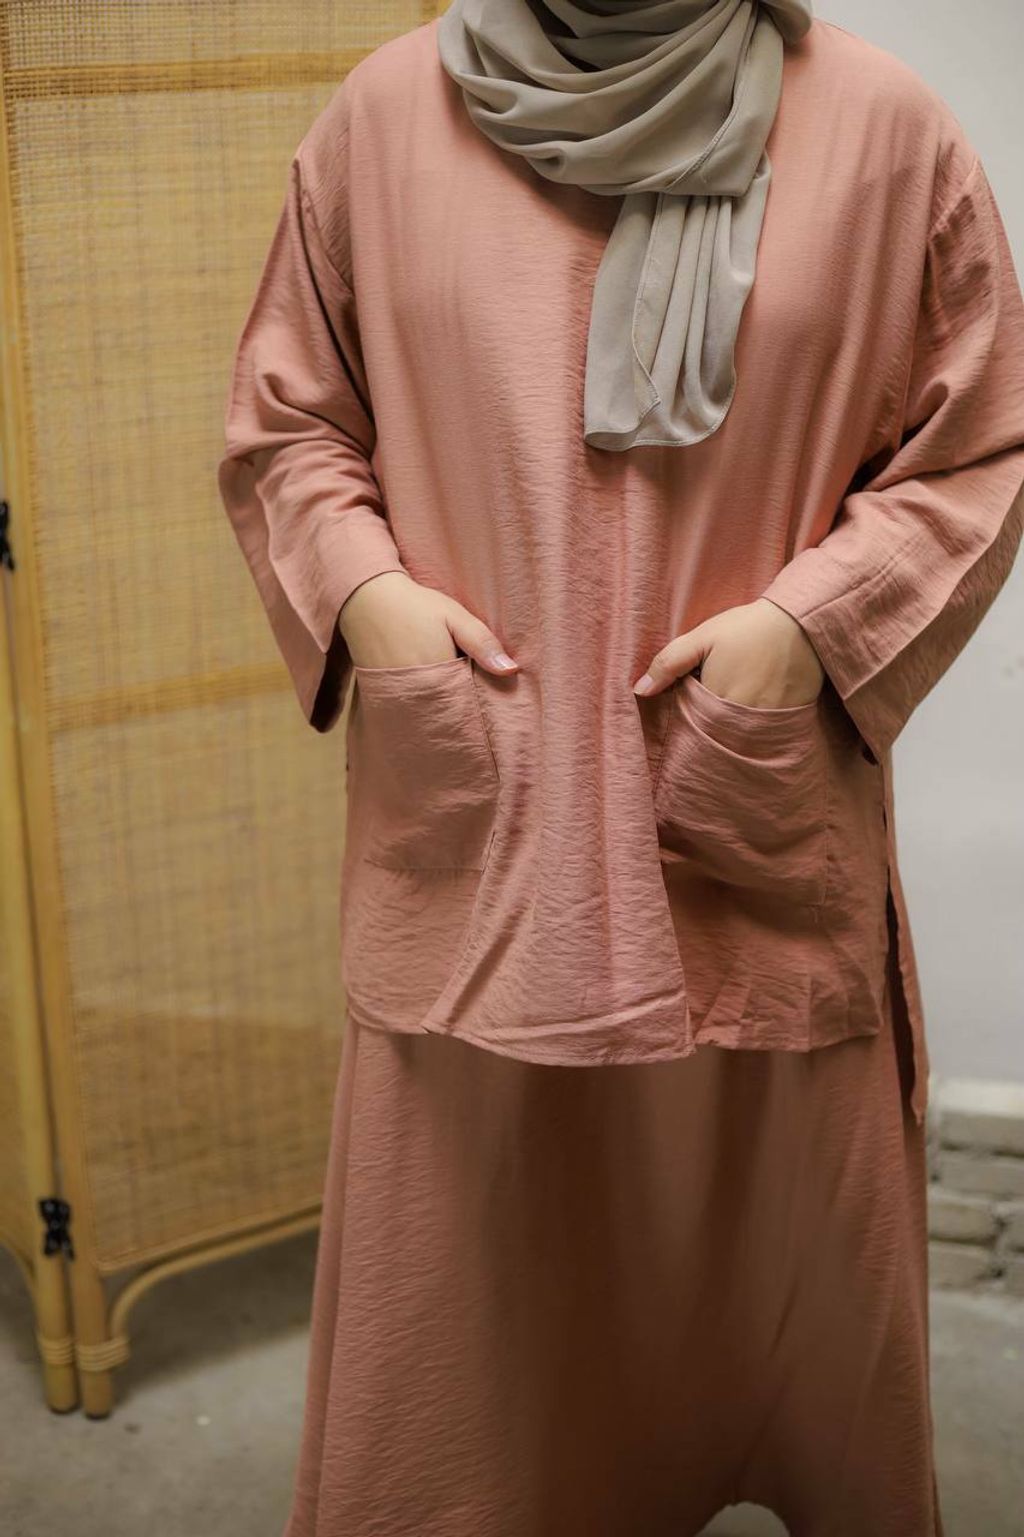 haura-wear-cotton-baju-muslimah-set-seluar-suit-muslimah-set-baju-dan-seluar-muslimah-palazzo (4).jpg